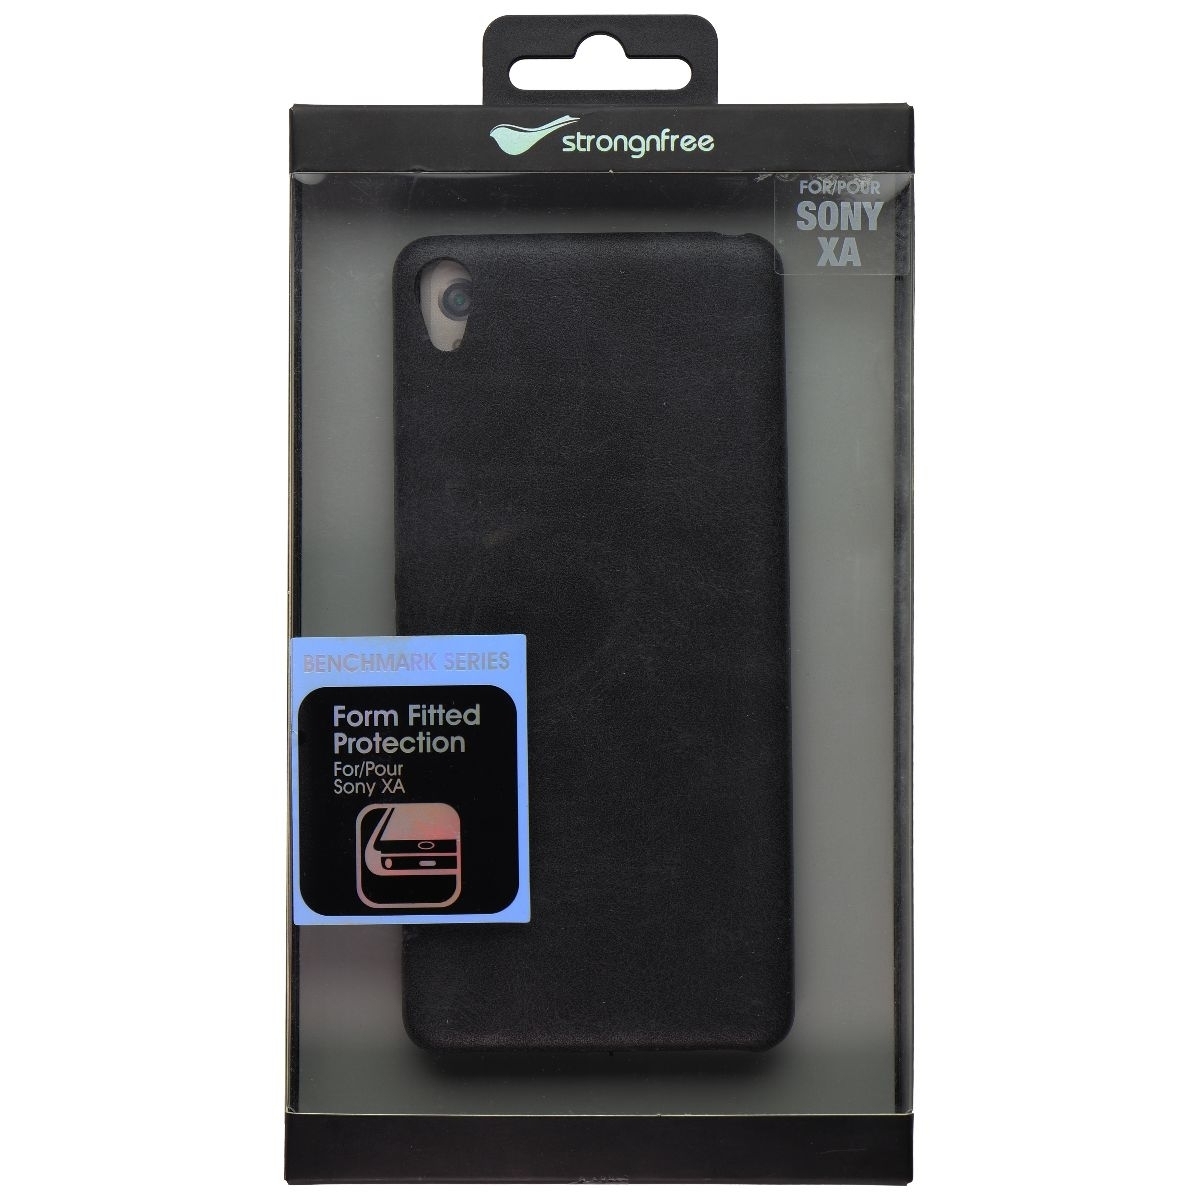 StrongNFree Benchmark Series Hard Case For Sony Xperia XA - Black (Refurbished)